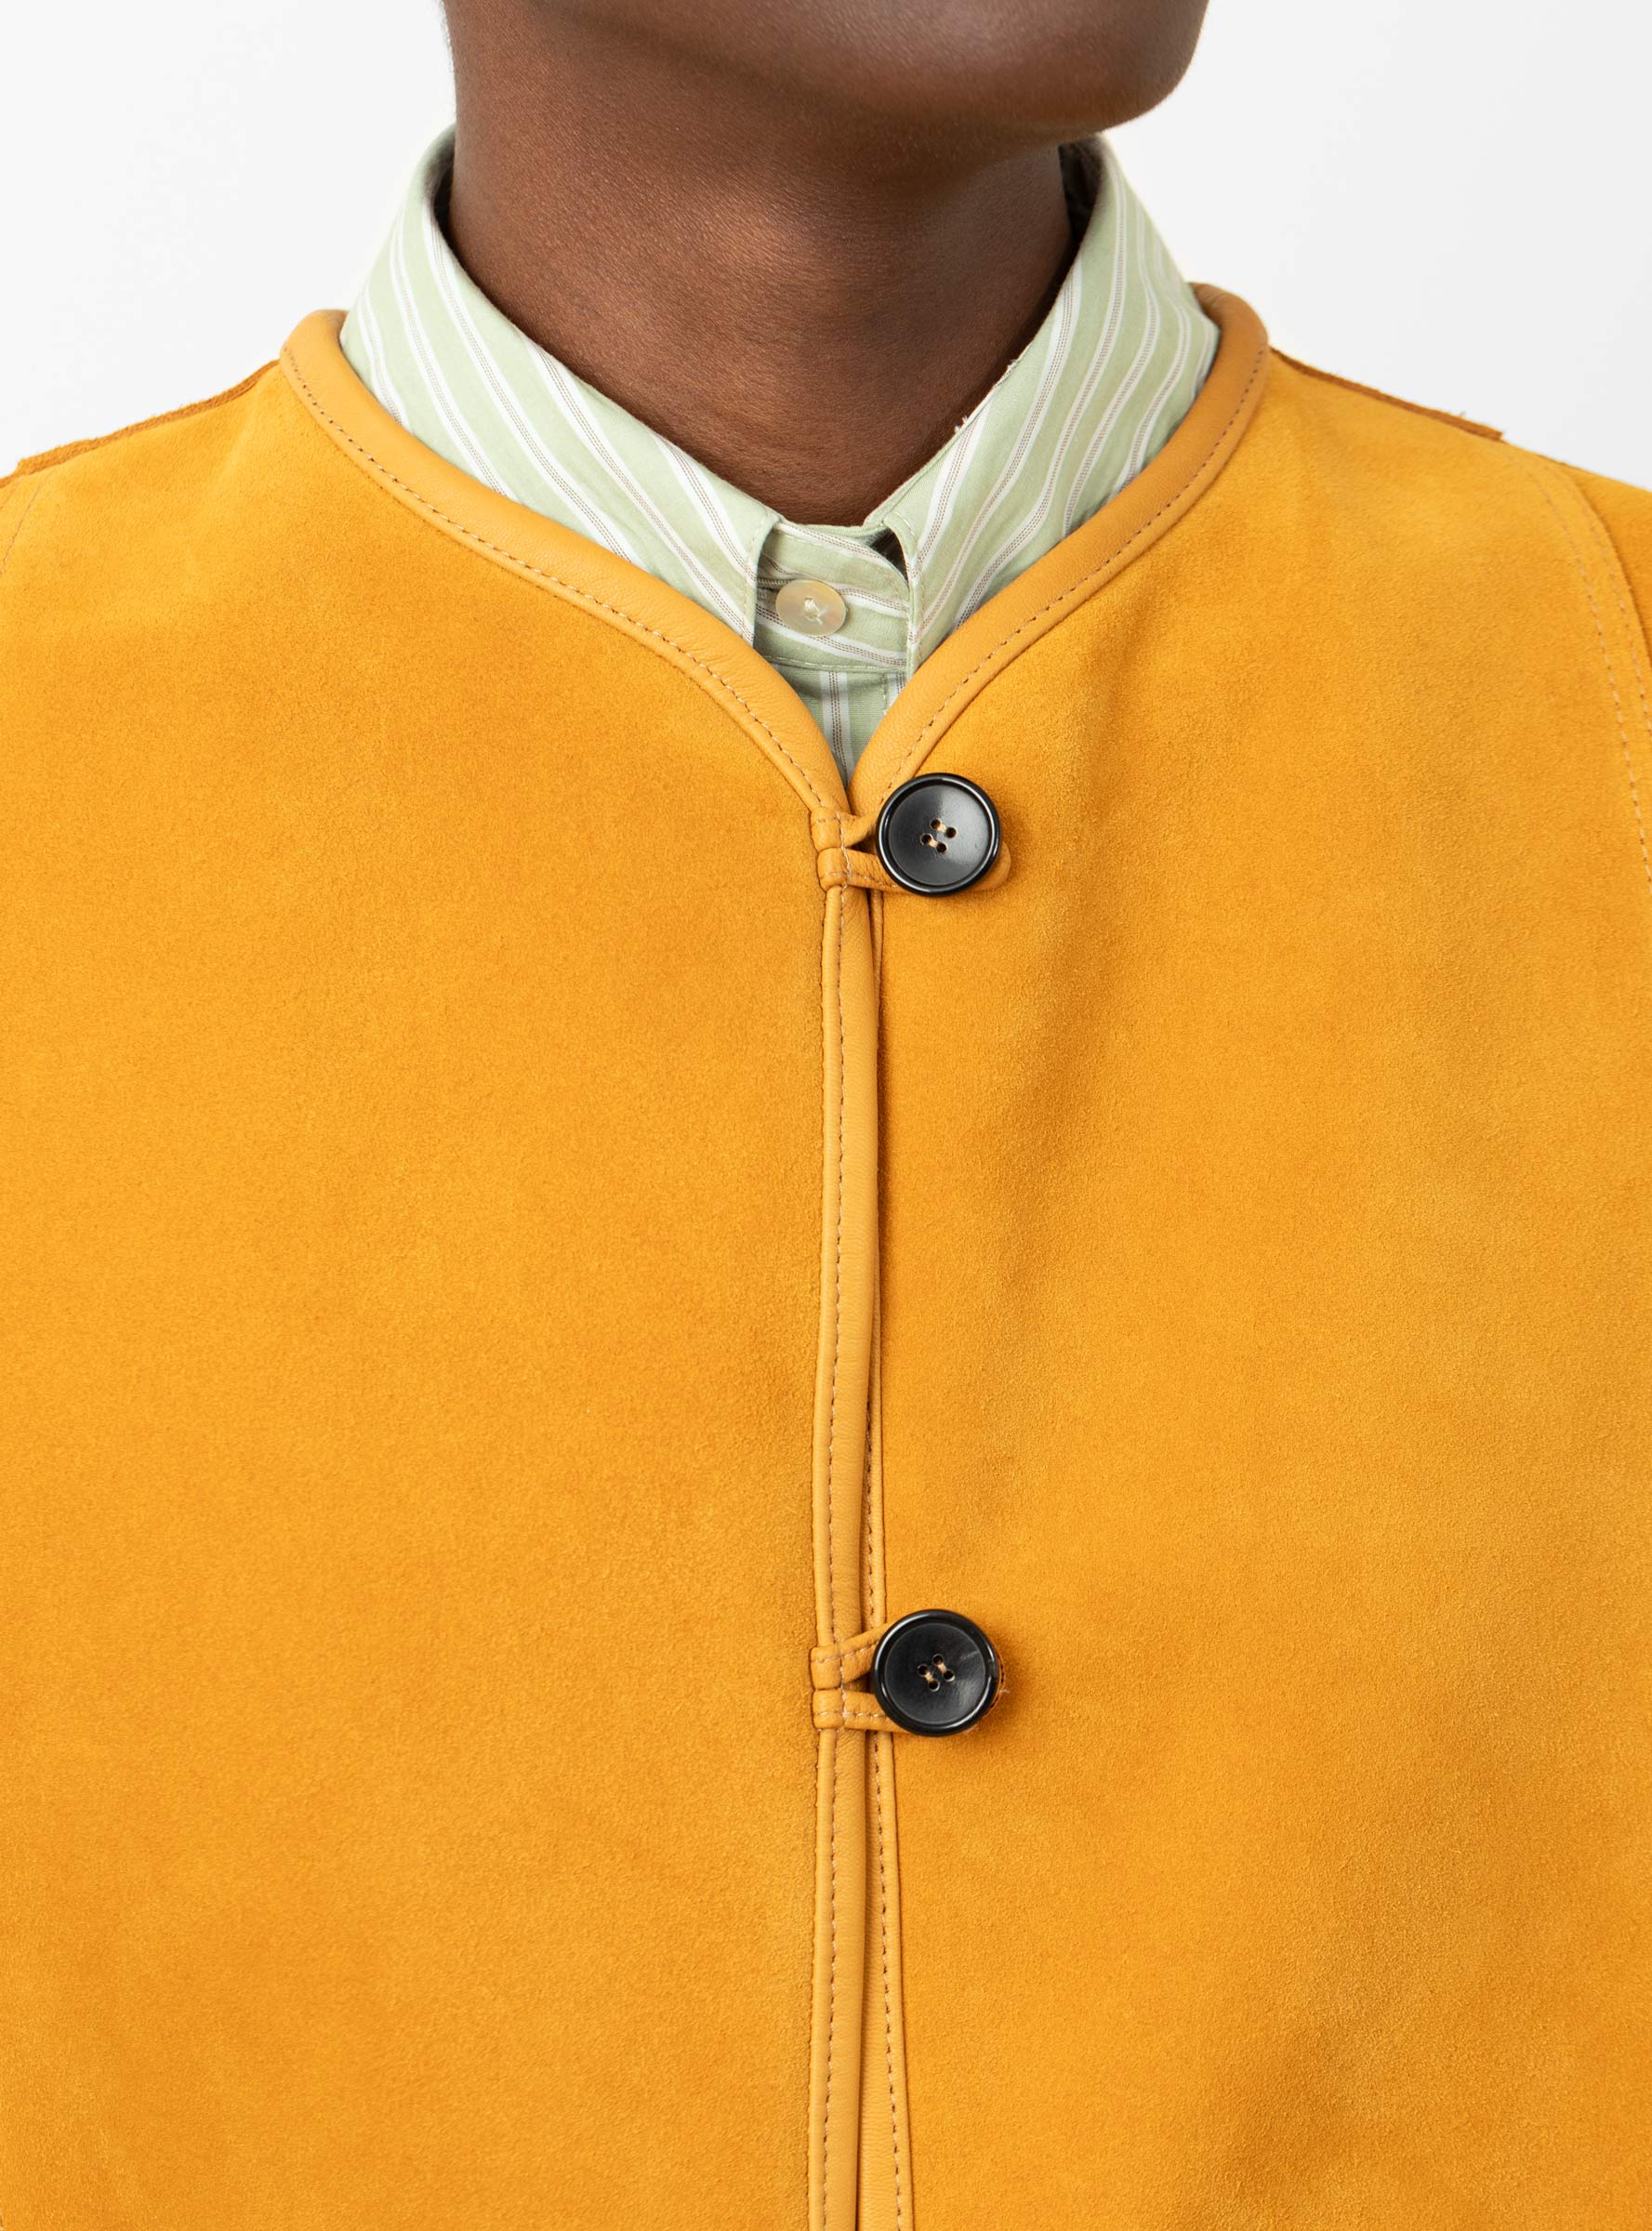  Cawley Stripe Ella Vest Mustard - Size: Medium